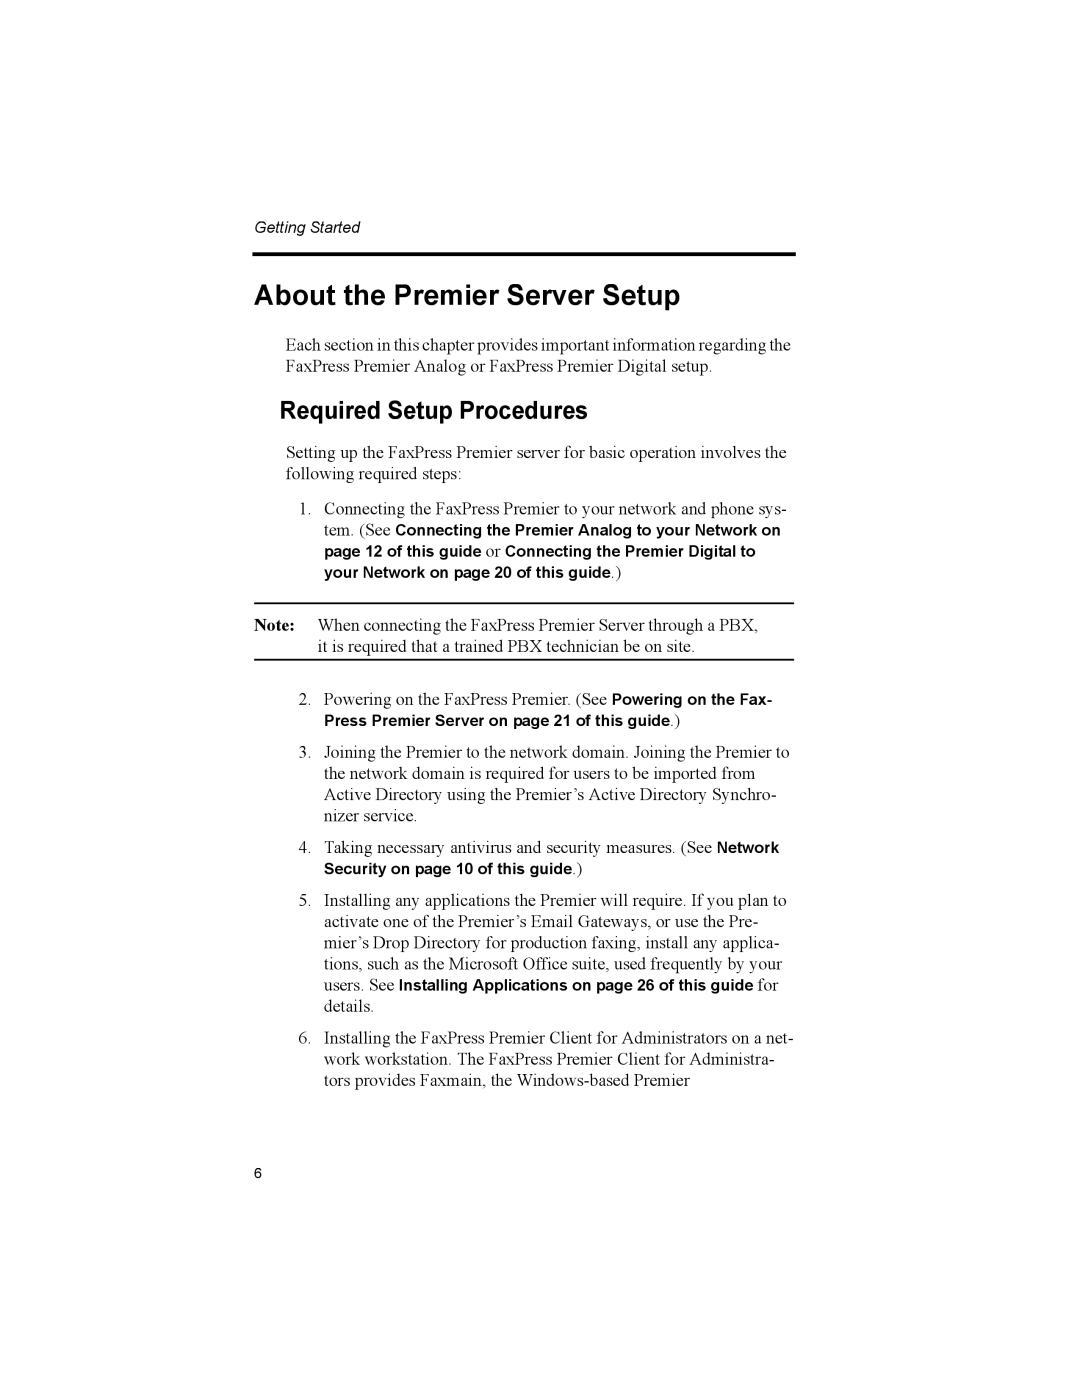 Castelle 61-1260-001A manual About the Premier Server Setup, Required Setup Procedures 